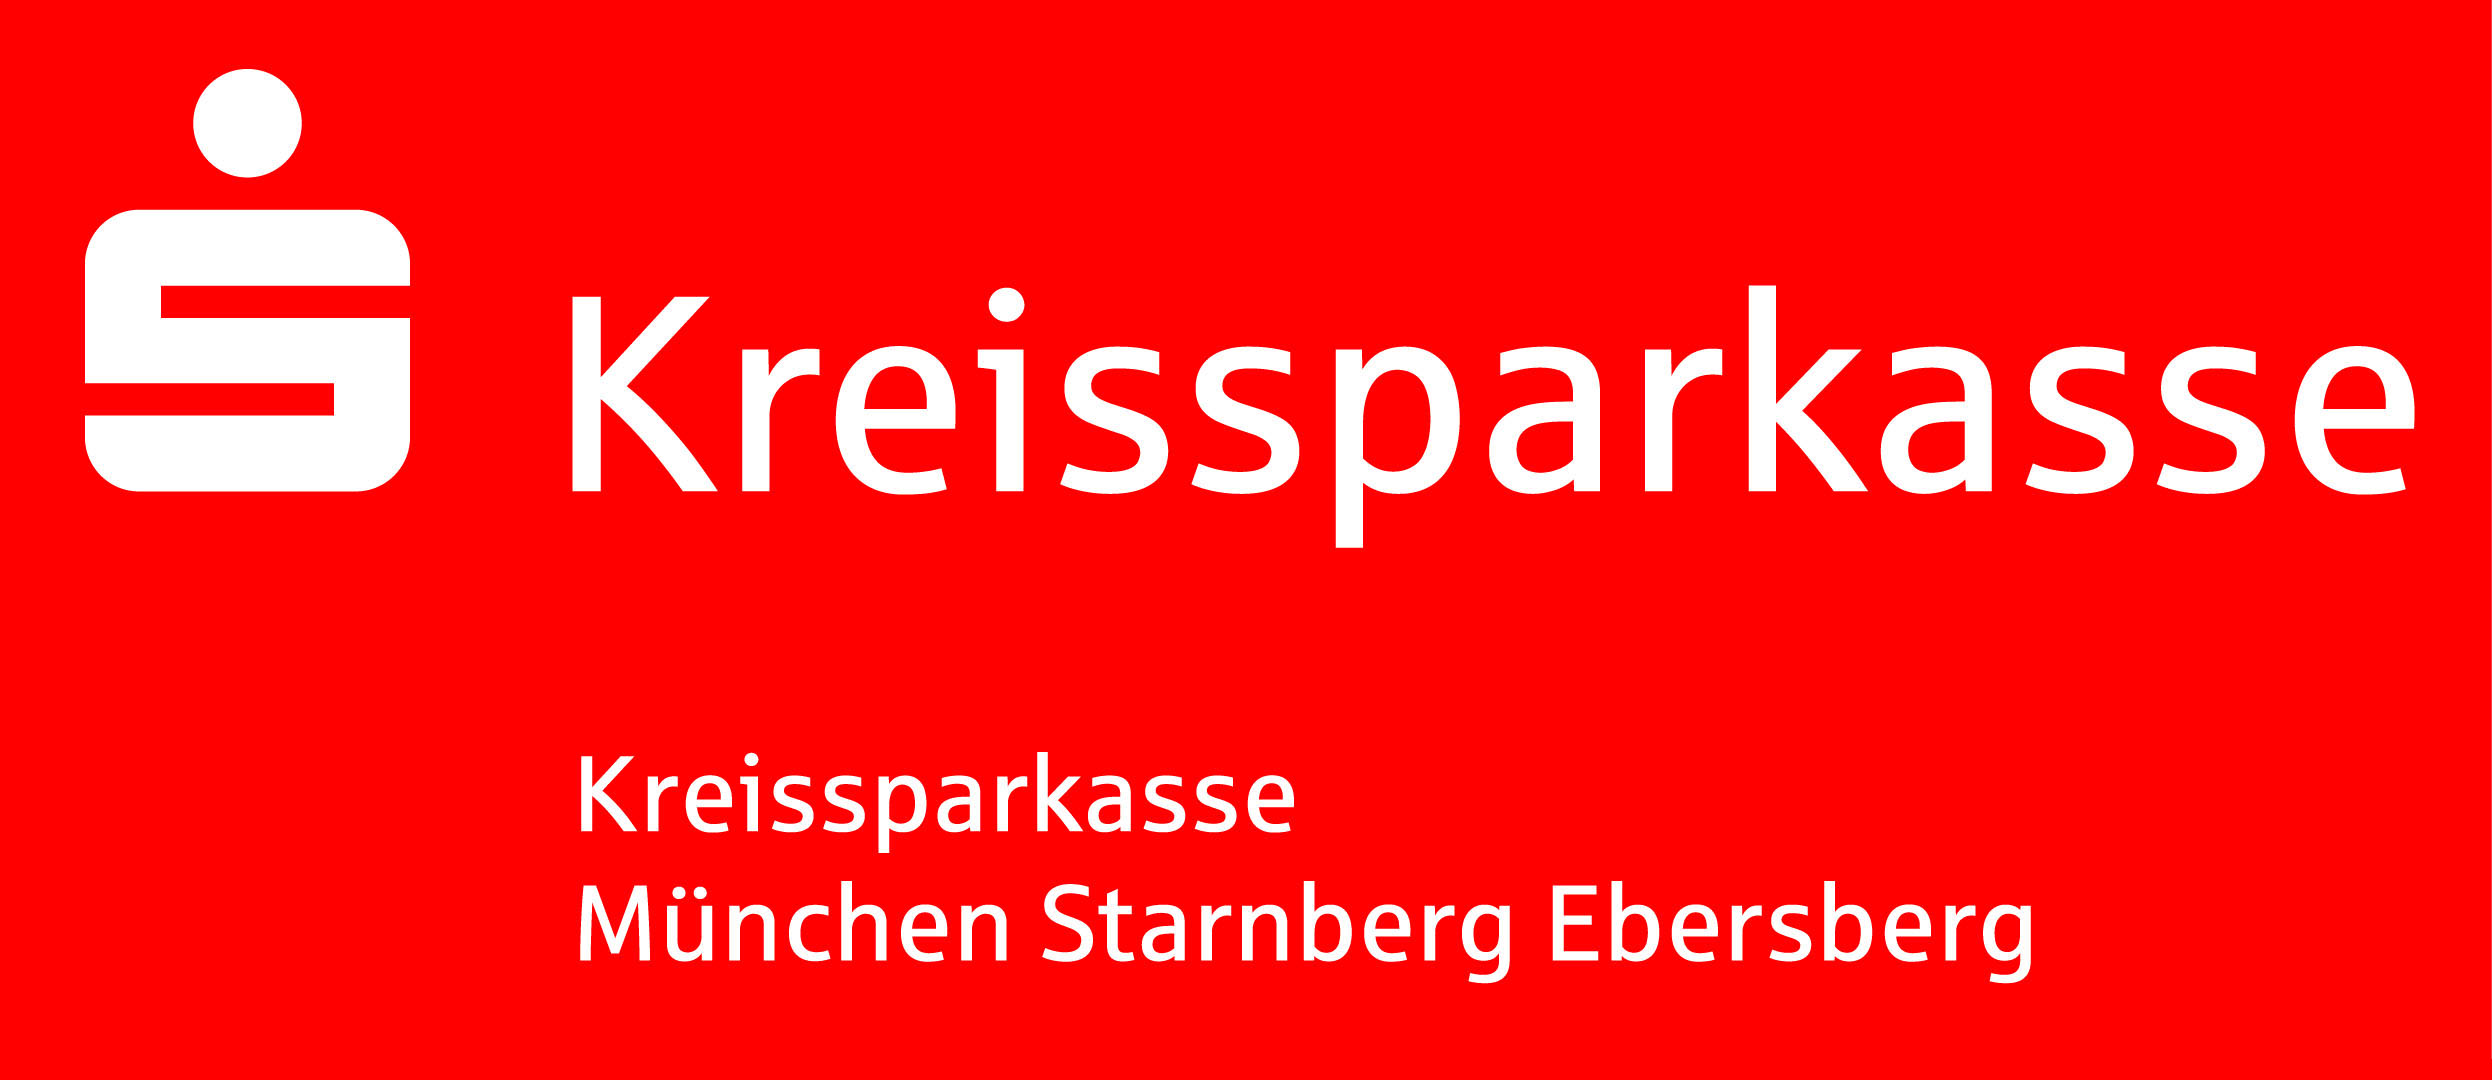 2018 BAF Sponsor Kreissparkasse